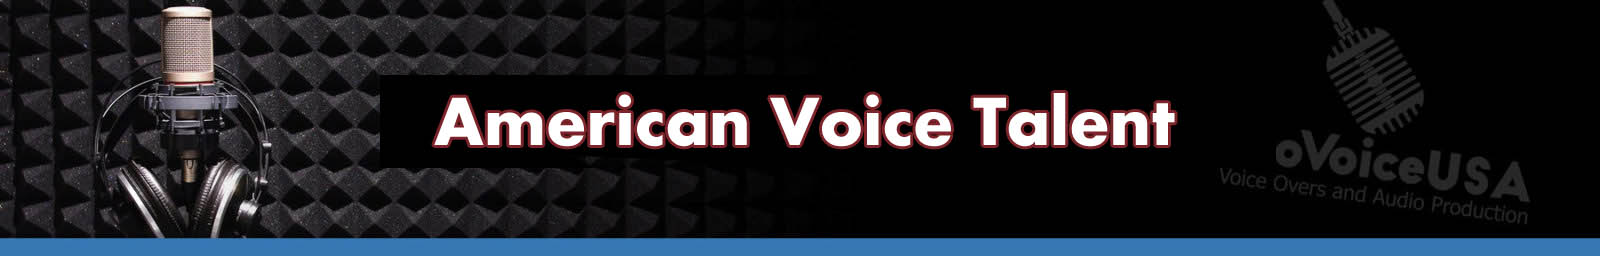 American Voice Talent | American Voice Recording Service | ProVoice USA